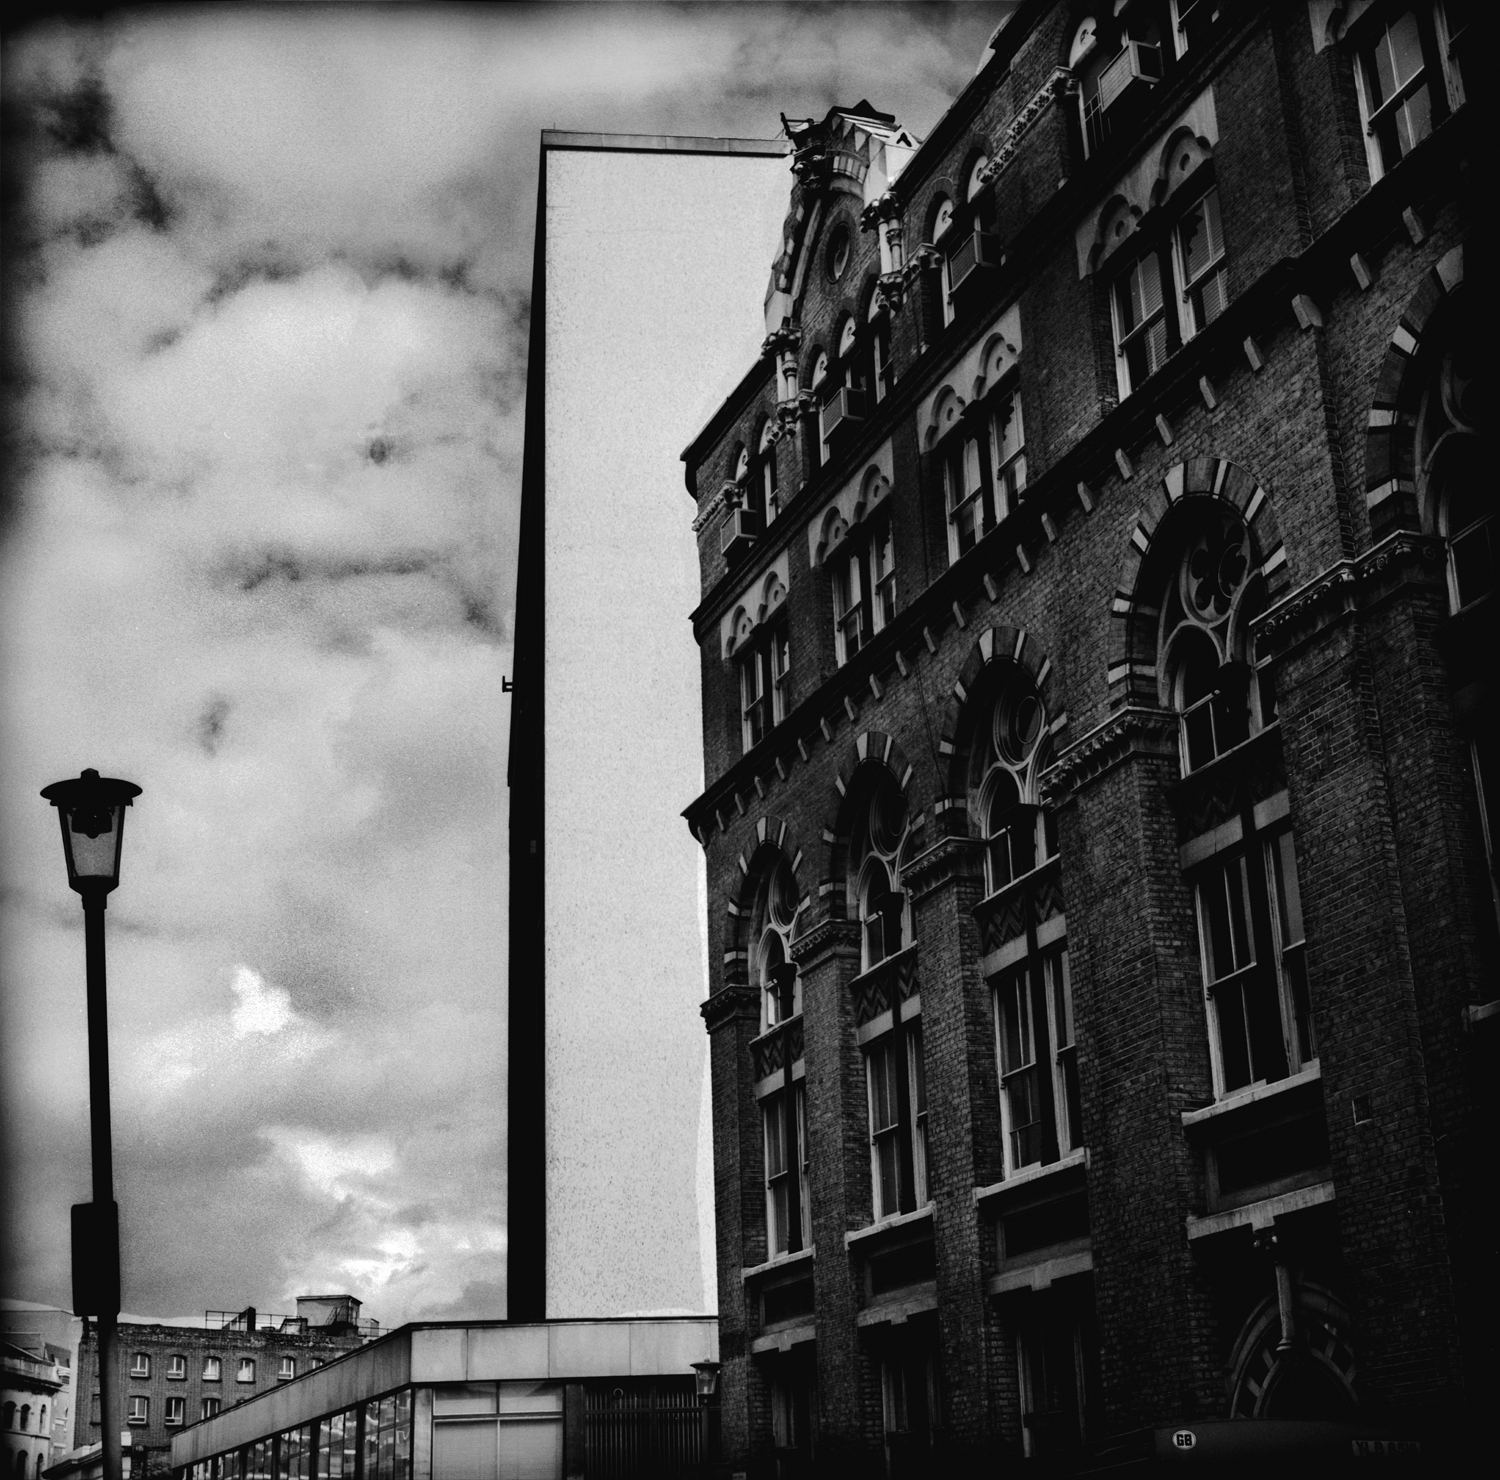 13. lamp and buildings, London